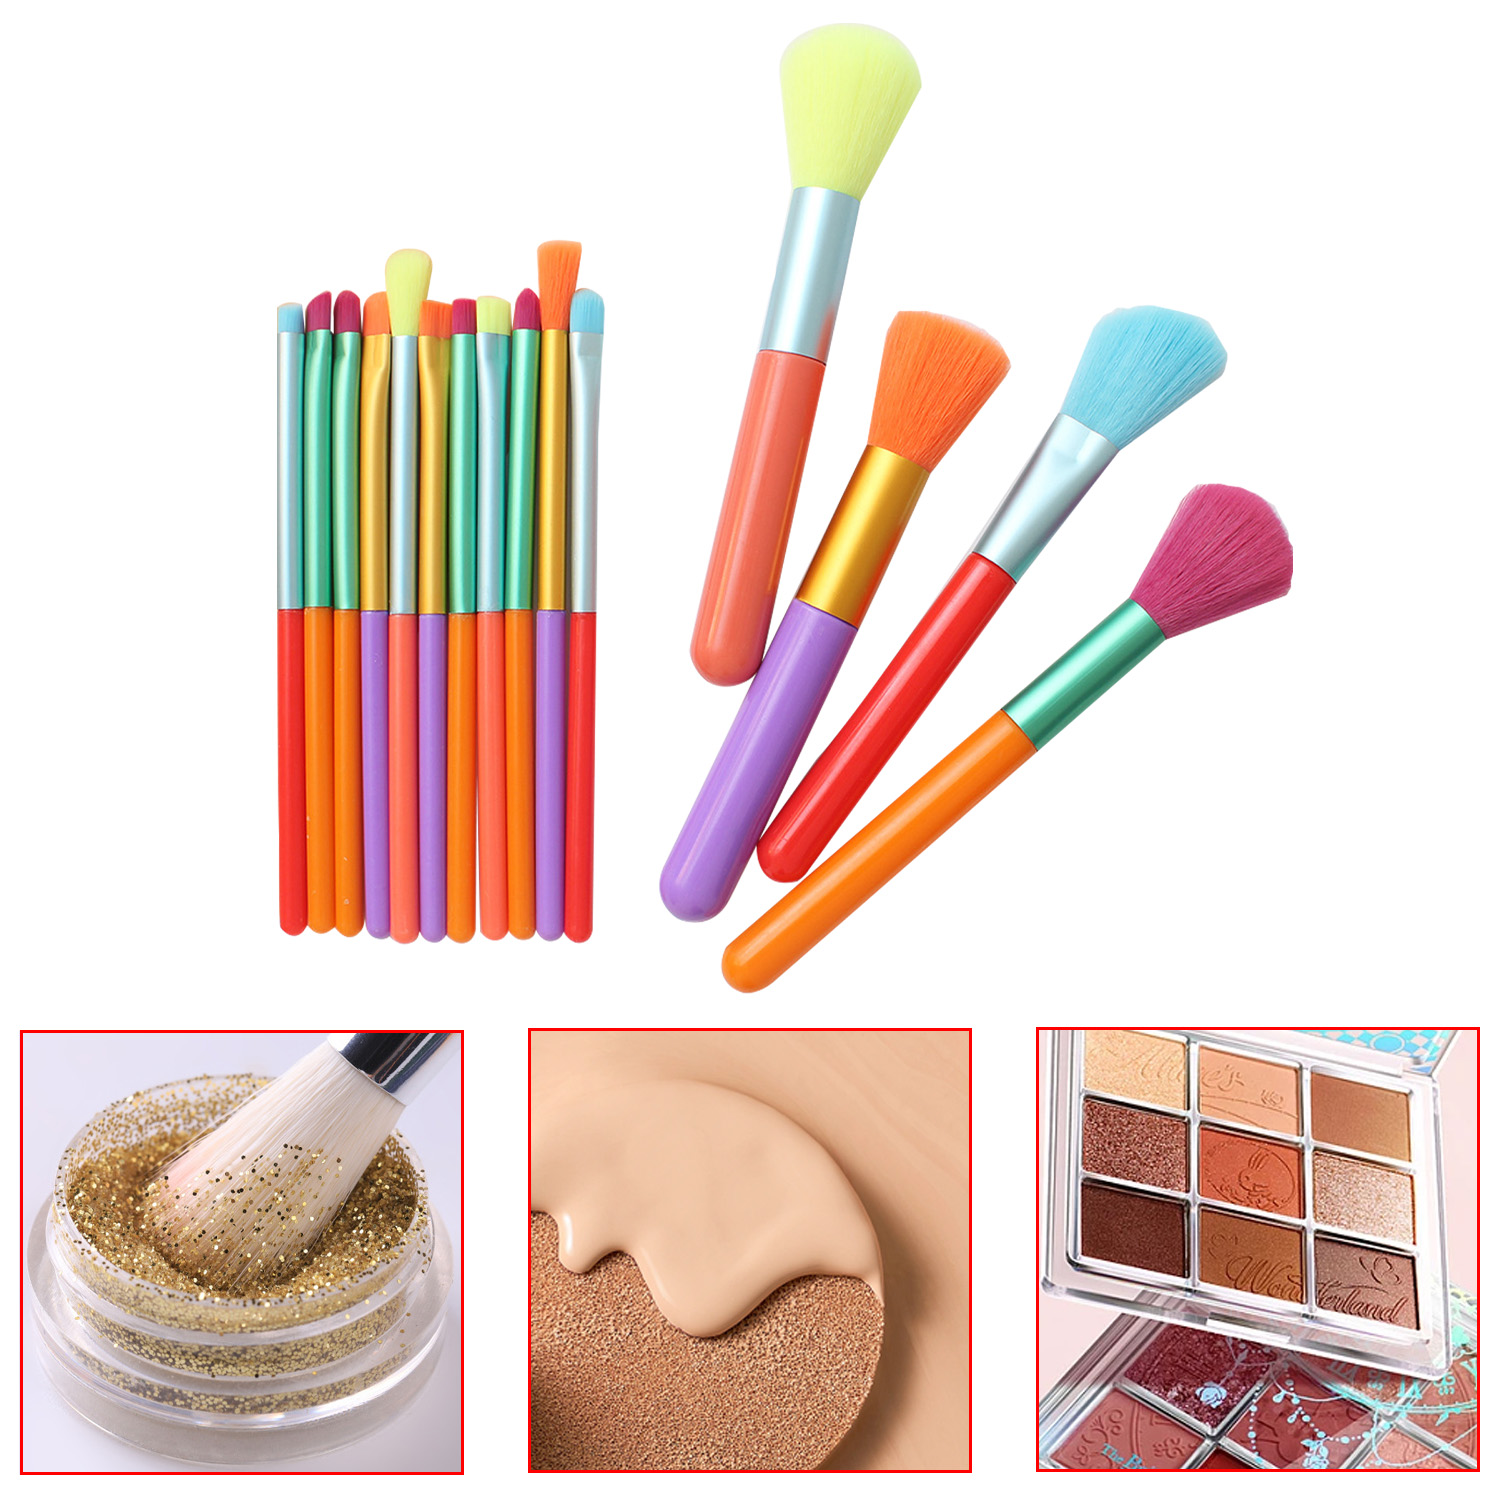 15 Pcs Makeup Brushes Full Set of Color Portable Beauty Makeup Tools Set